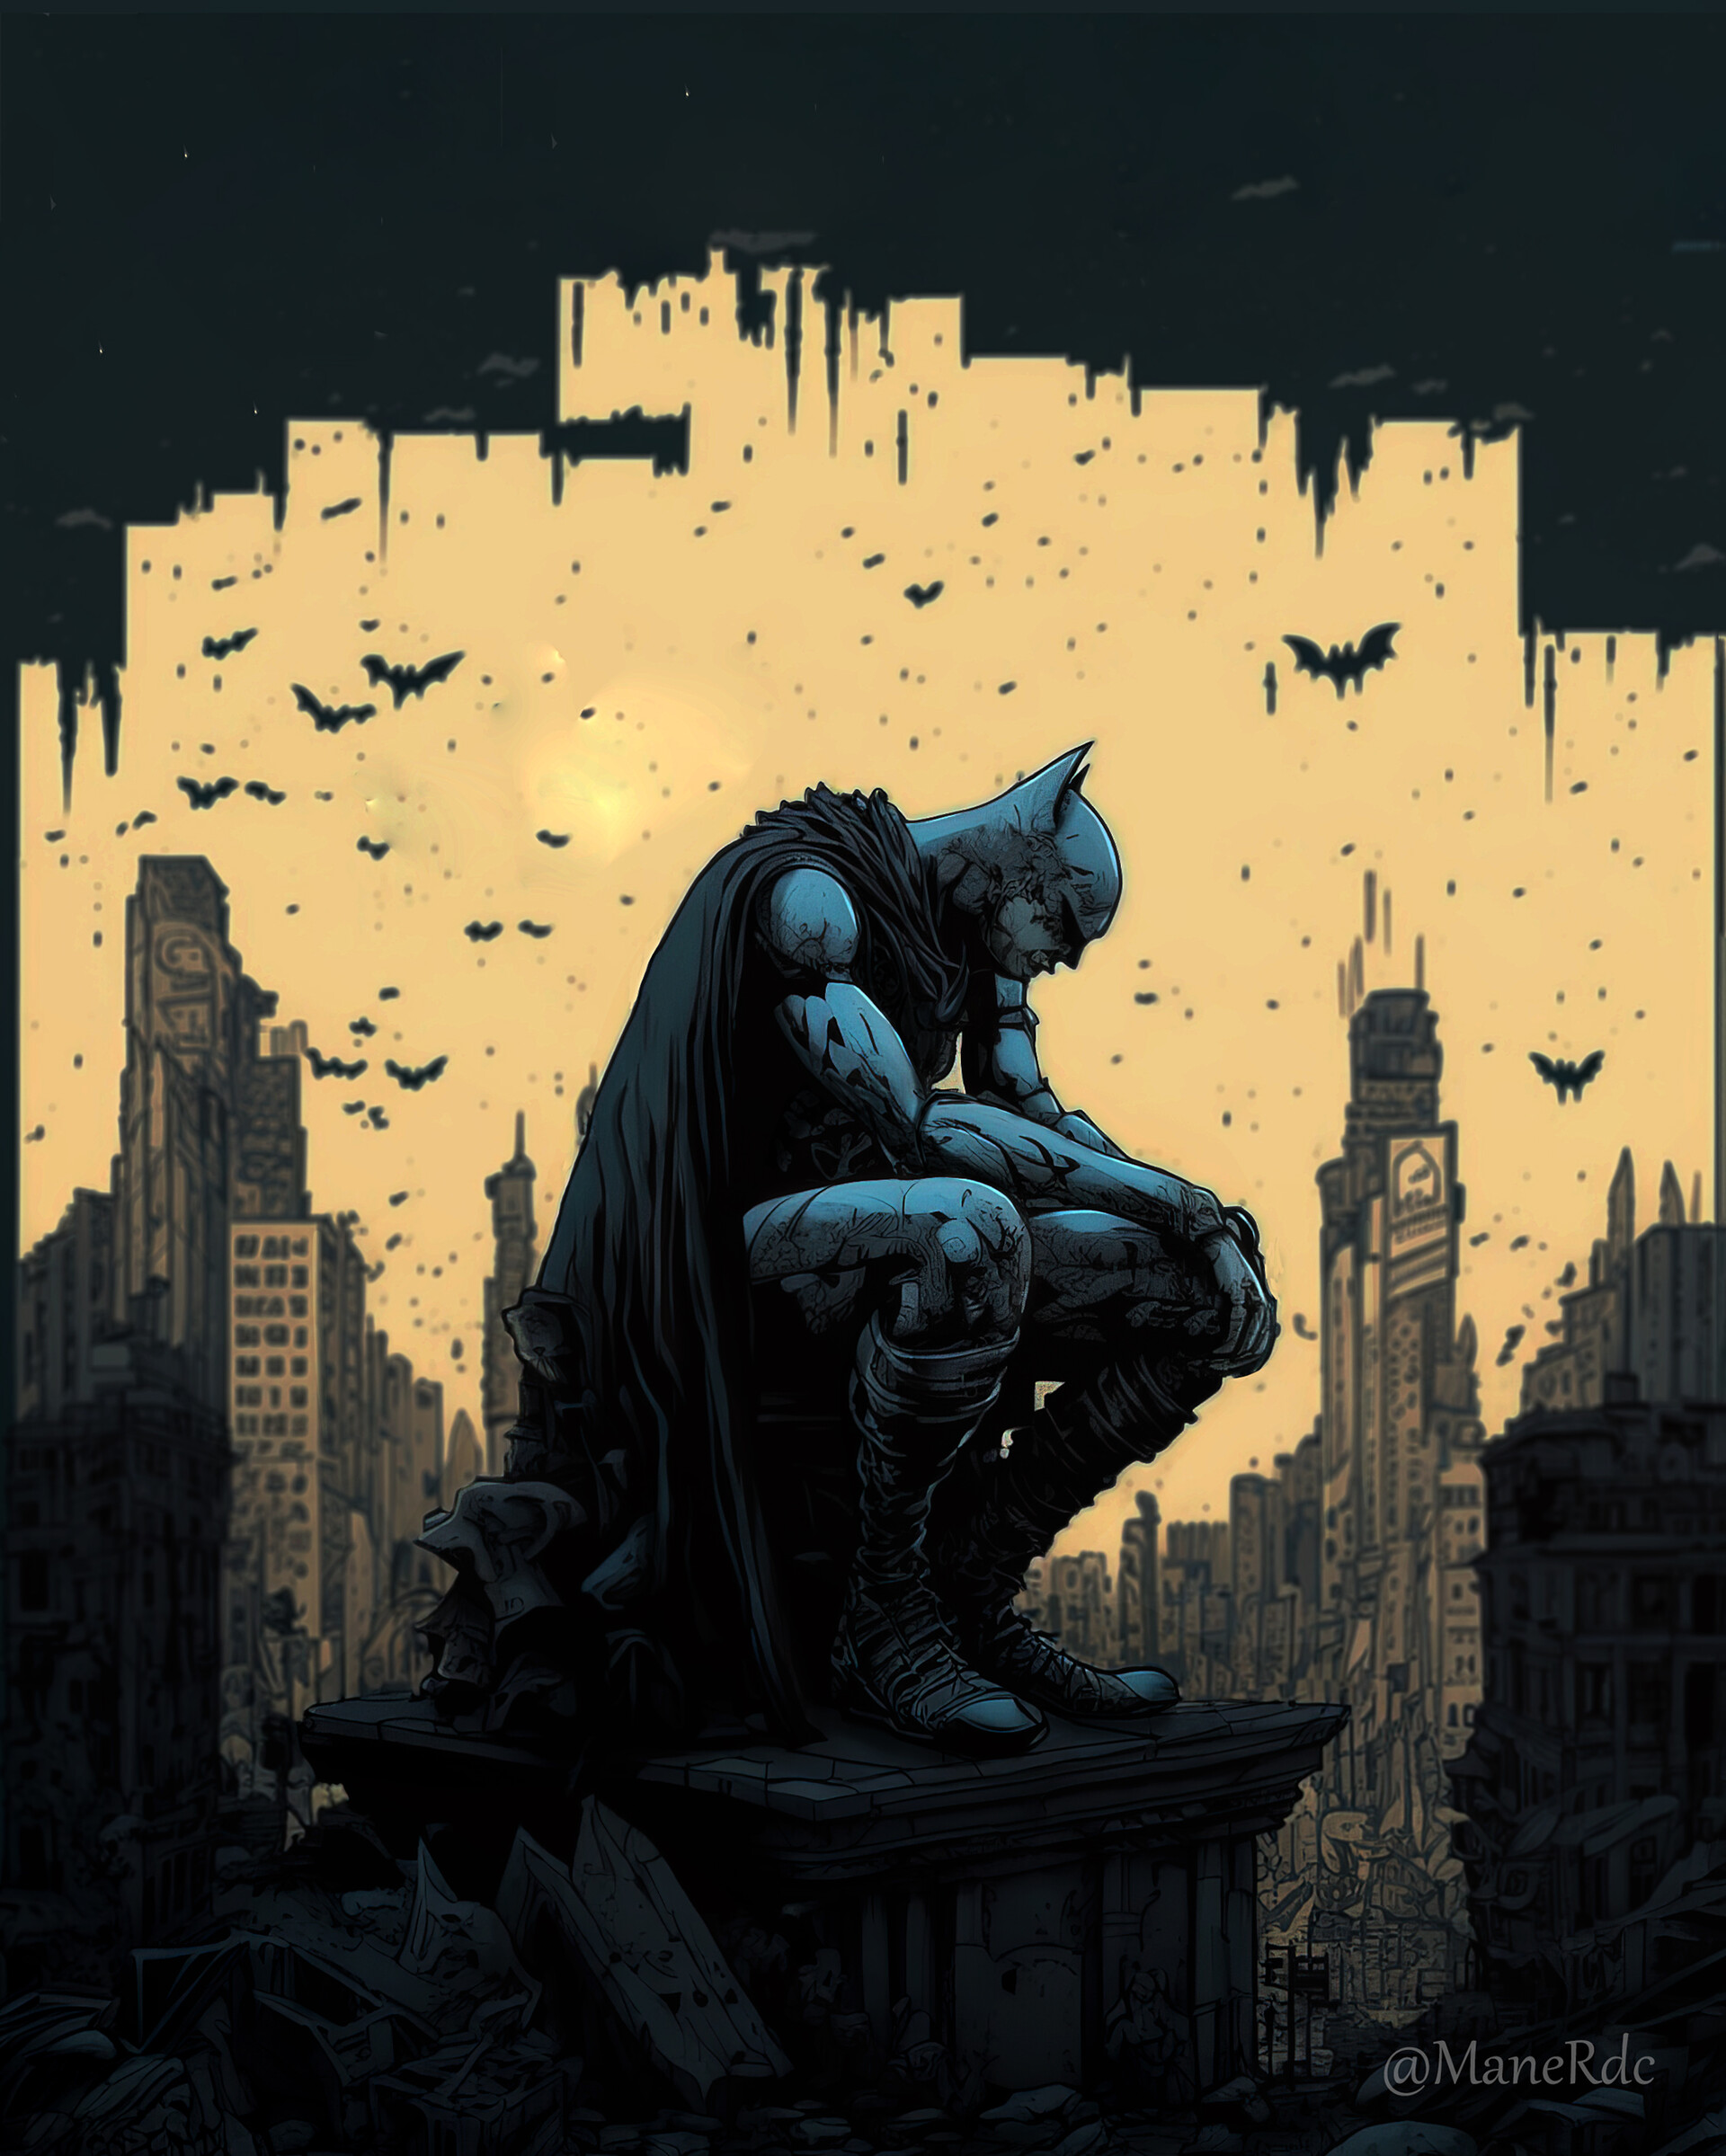 ArtStation - Batman Comicbook Cover